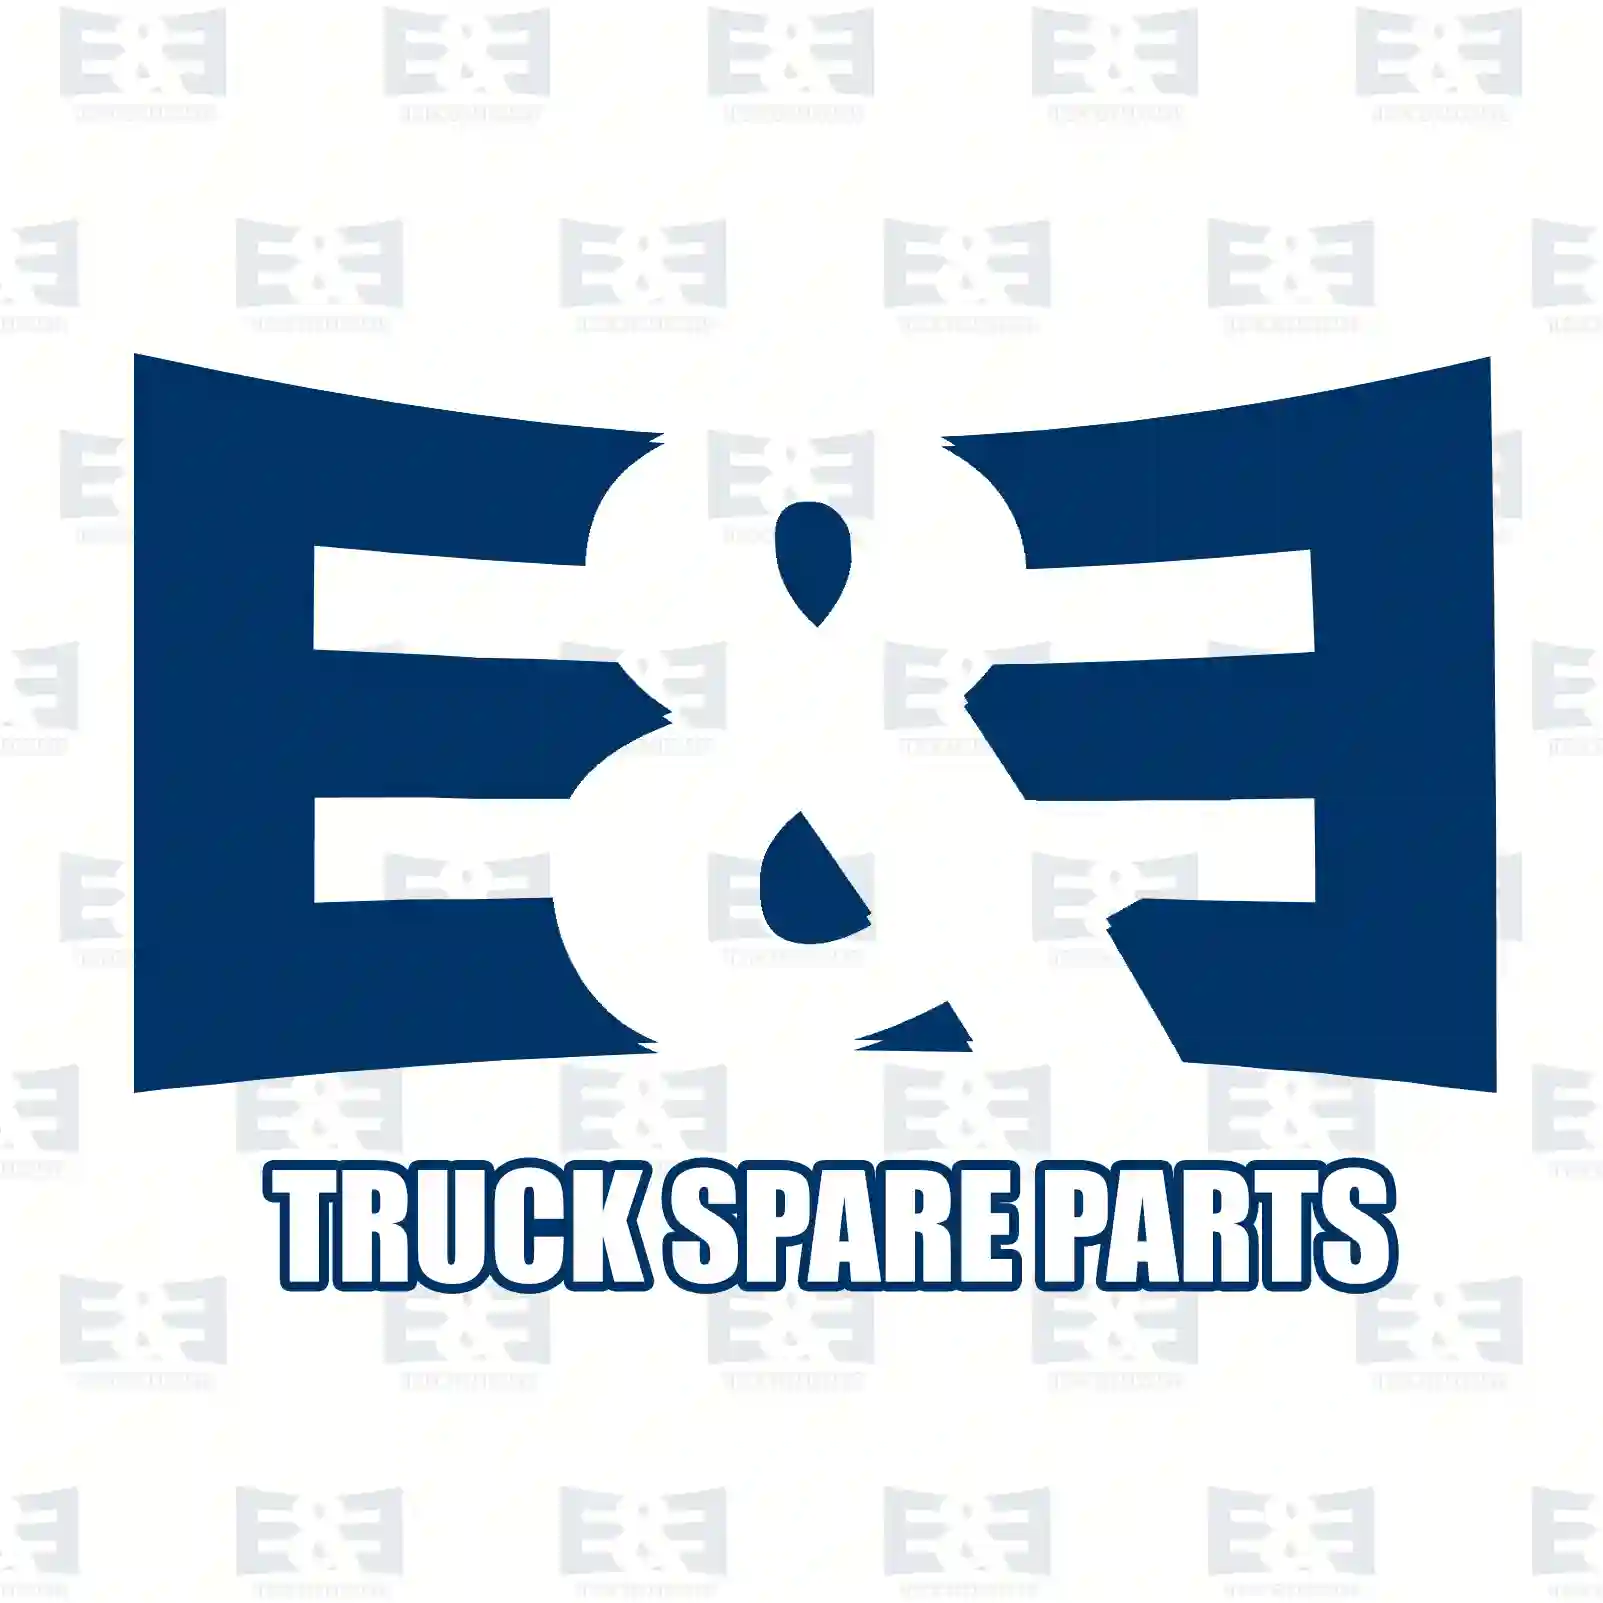 Engine mounting, 2E2207575, 21563456 ||  2E2207575 E&E Truck Spare Parts | Truck Spare Parts, Auotomotive Spare Parts Engine mounting, 2E2207575, 21563456 ||  2E2207575 E&E Truck Spare Parts | Truck Spare Parts, Auotomotive Spare Parts